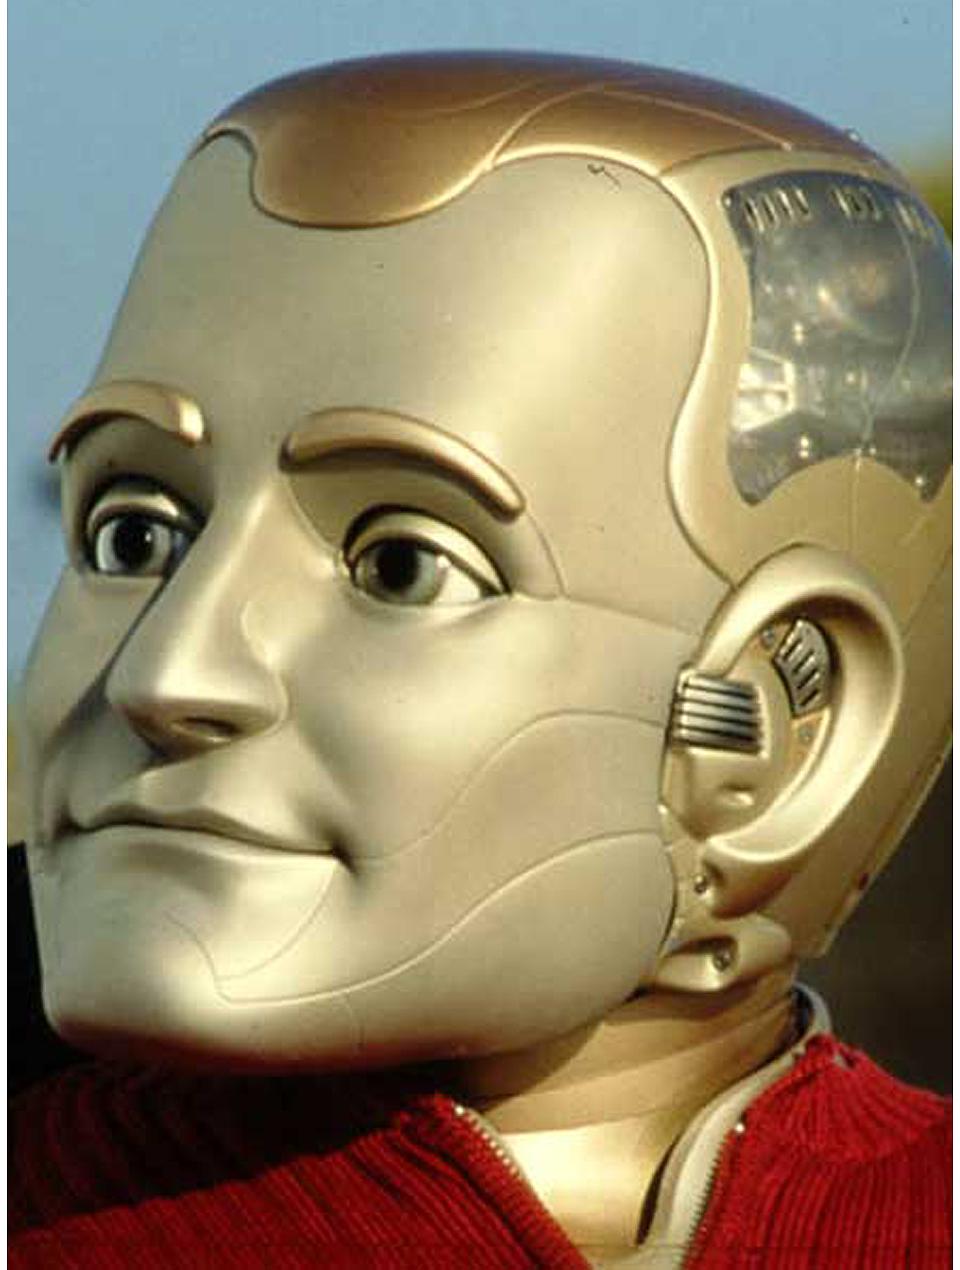 Industrial Original Bicentennial Man Animatronic Head Appliance Worn by Robin Williams